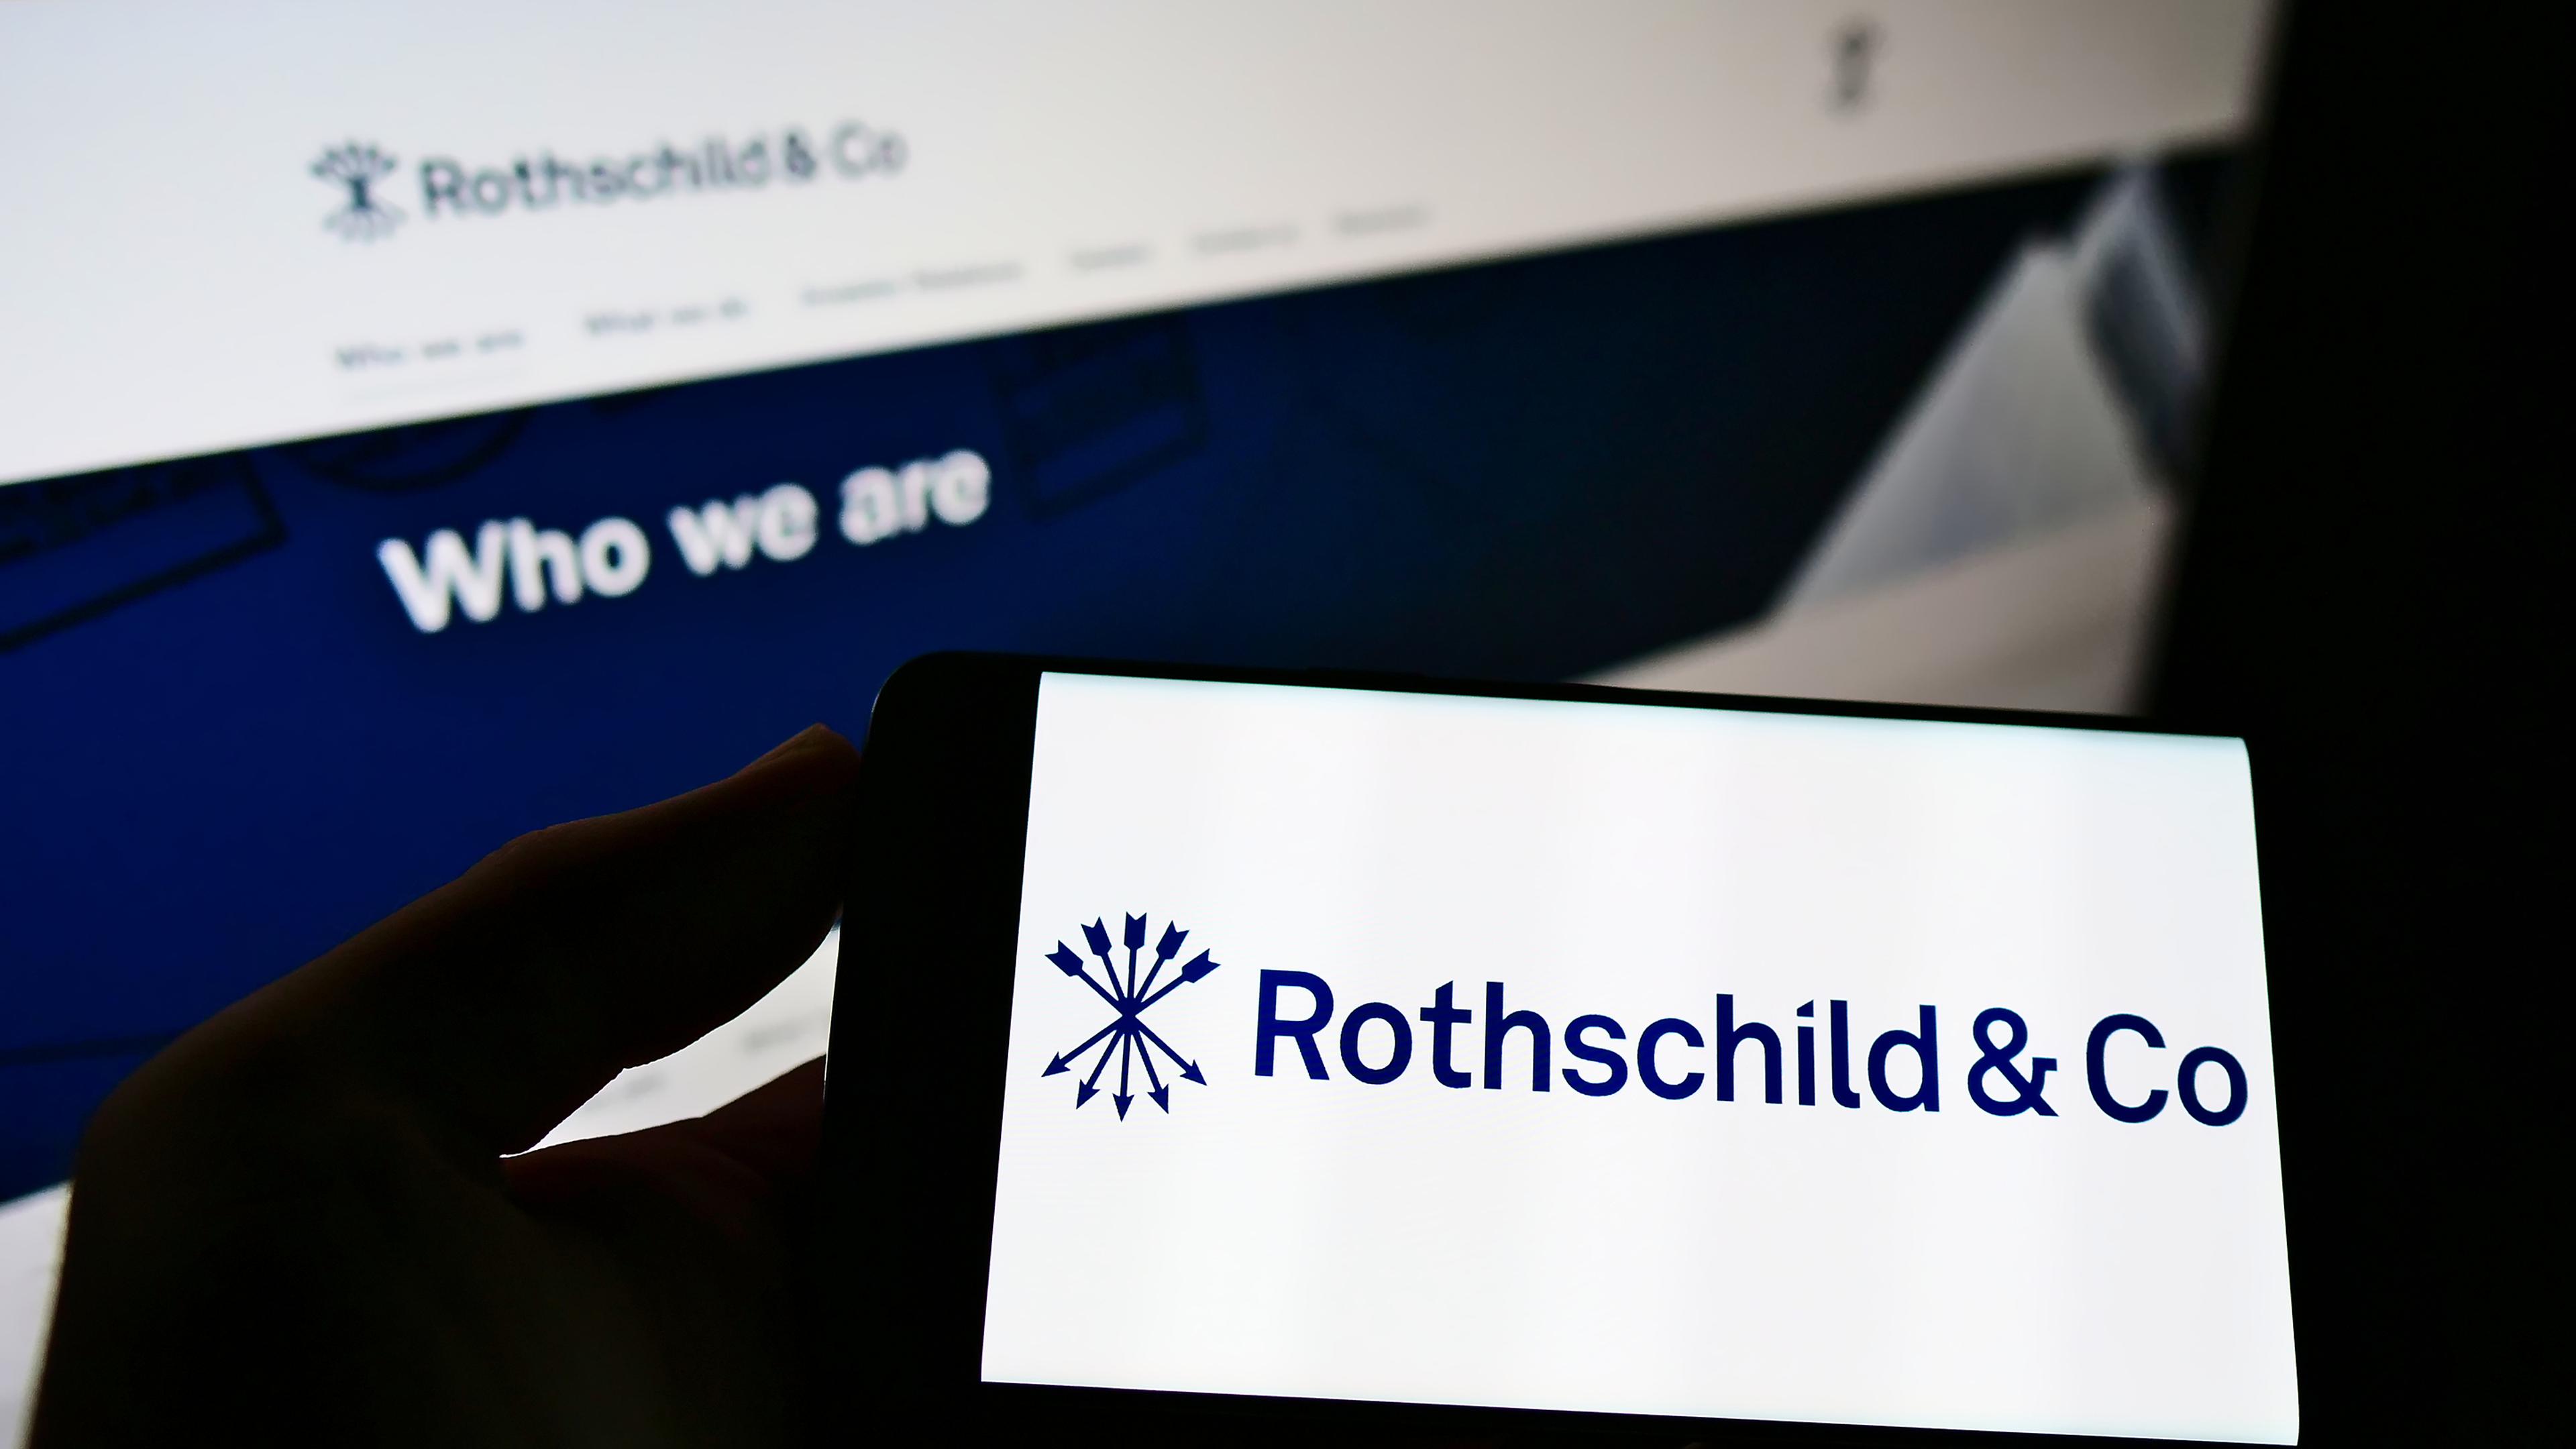 Rothschild & Co